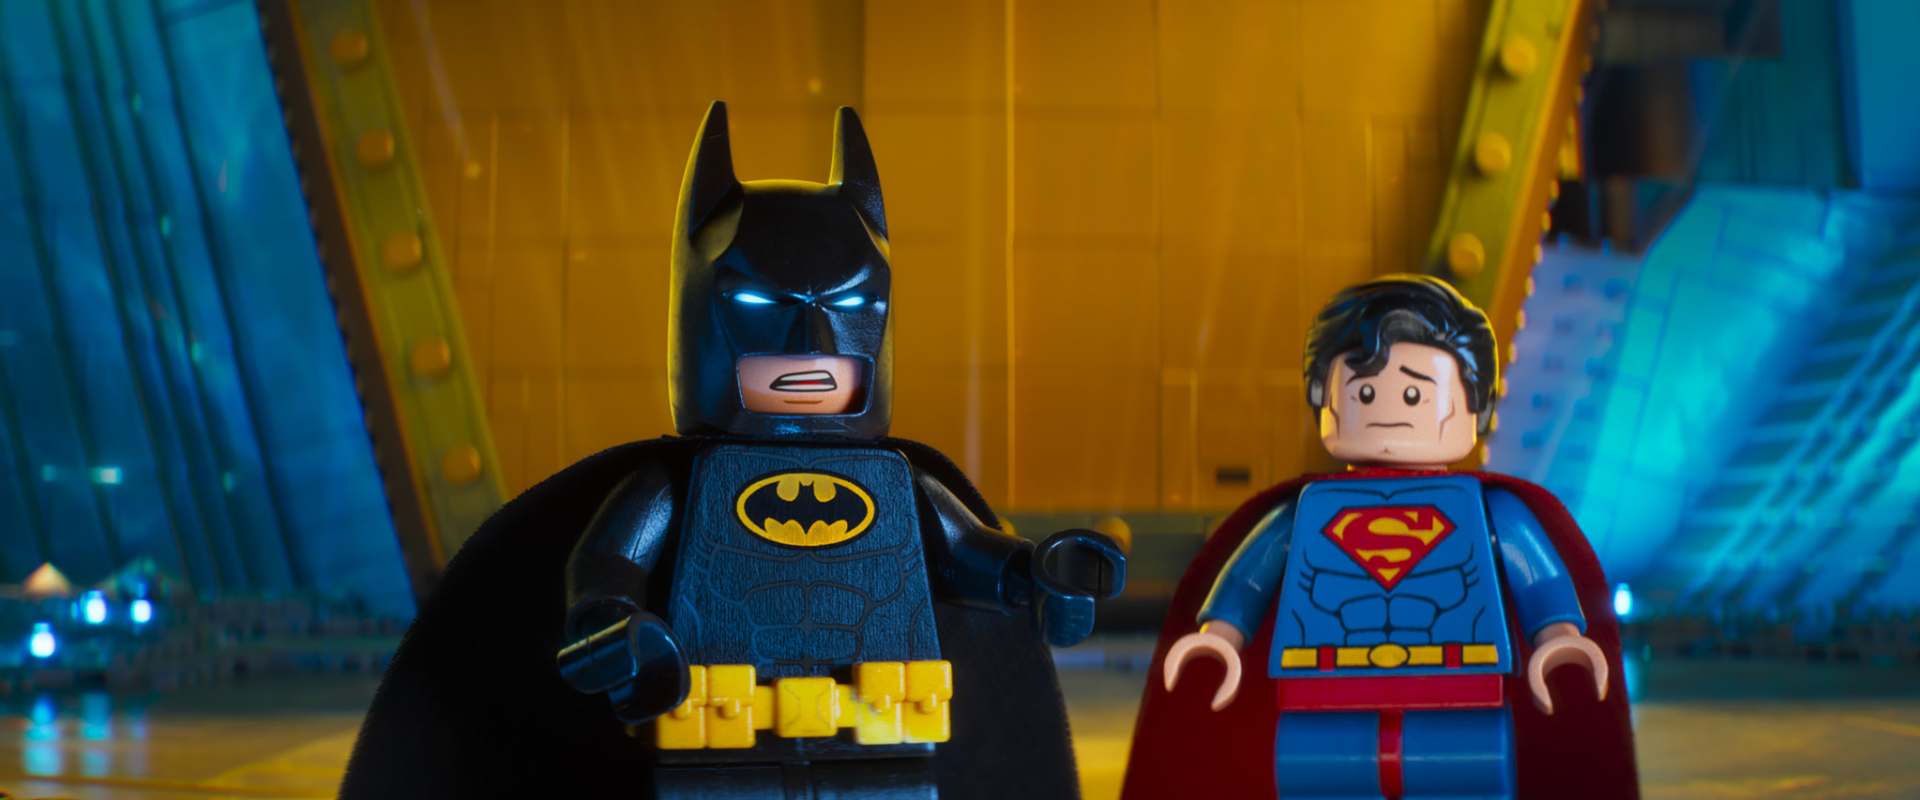 The Lego Batman Movie background 1